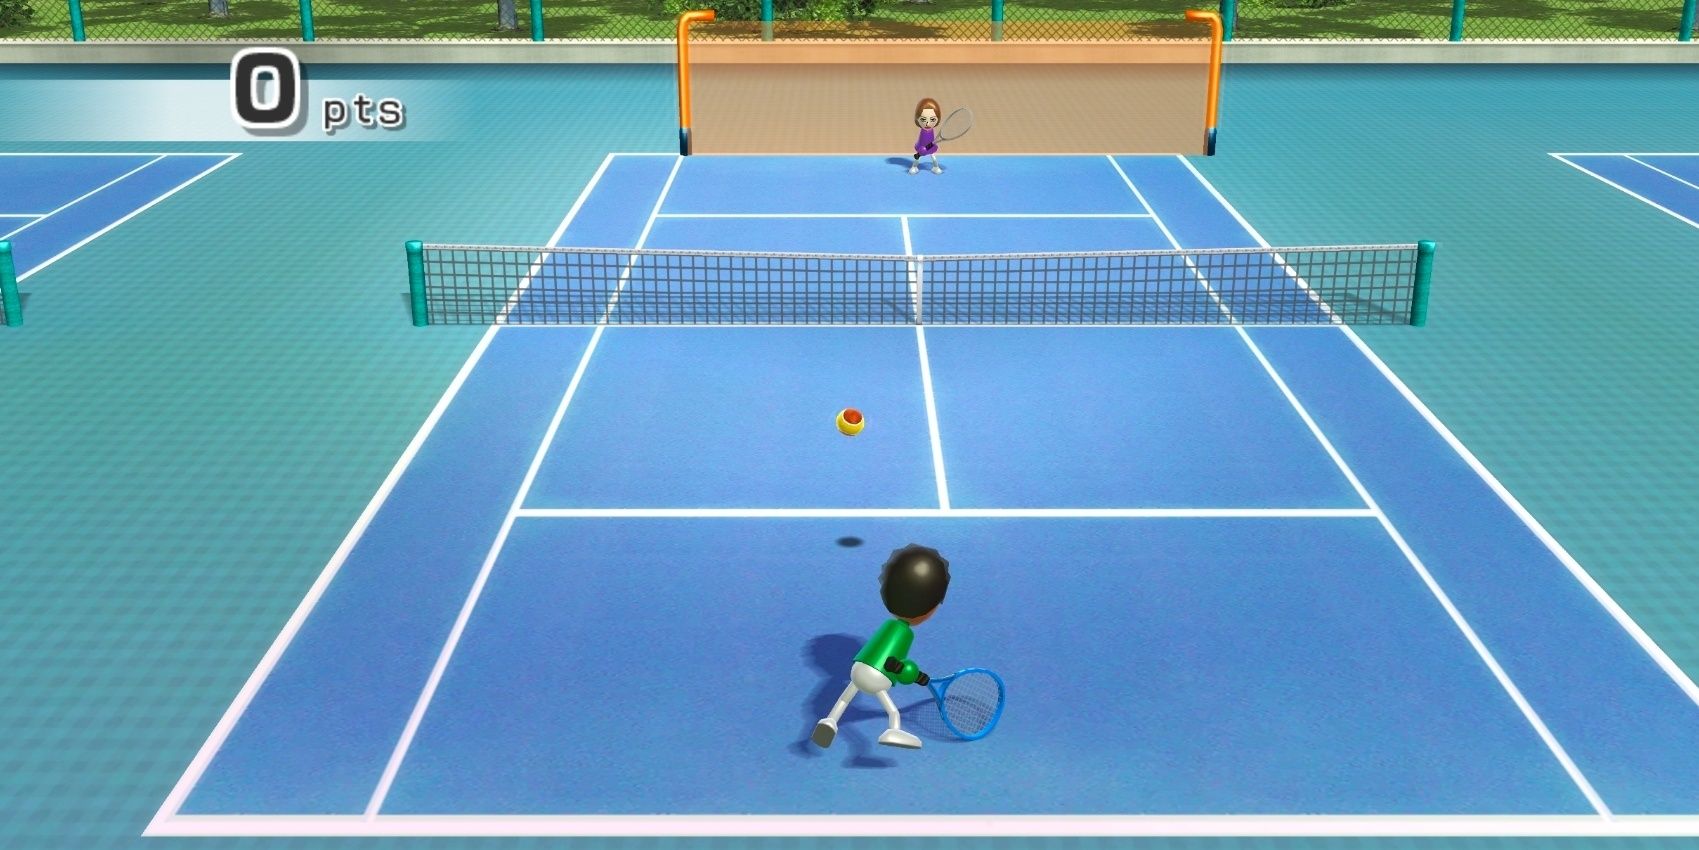 Tennis Training in Wii Sports 